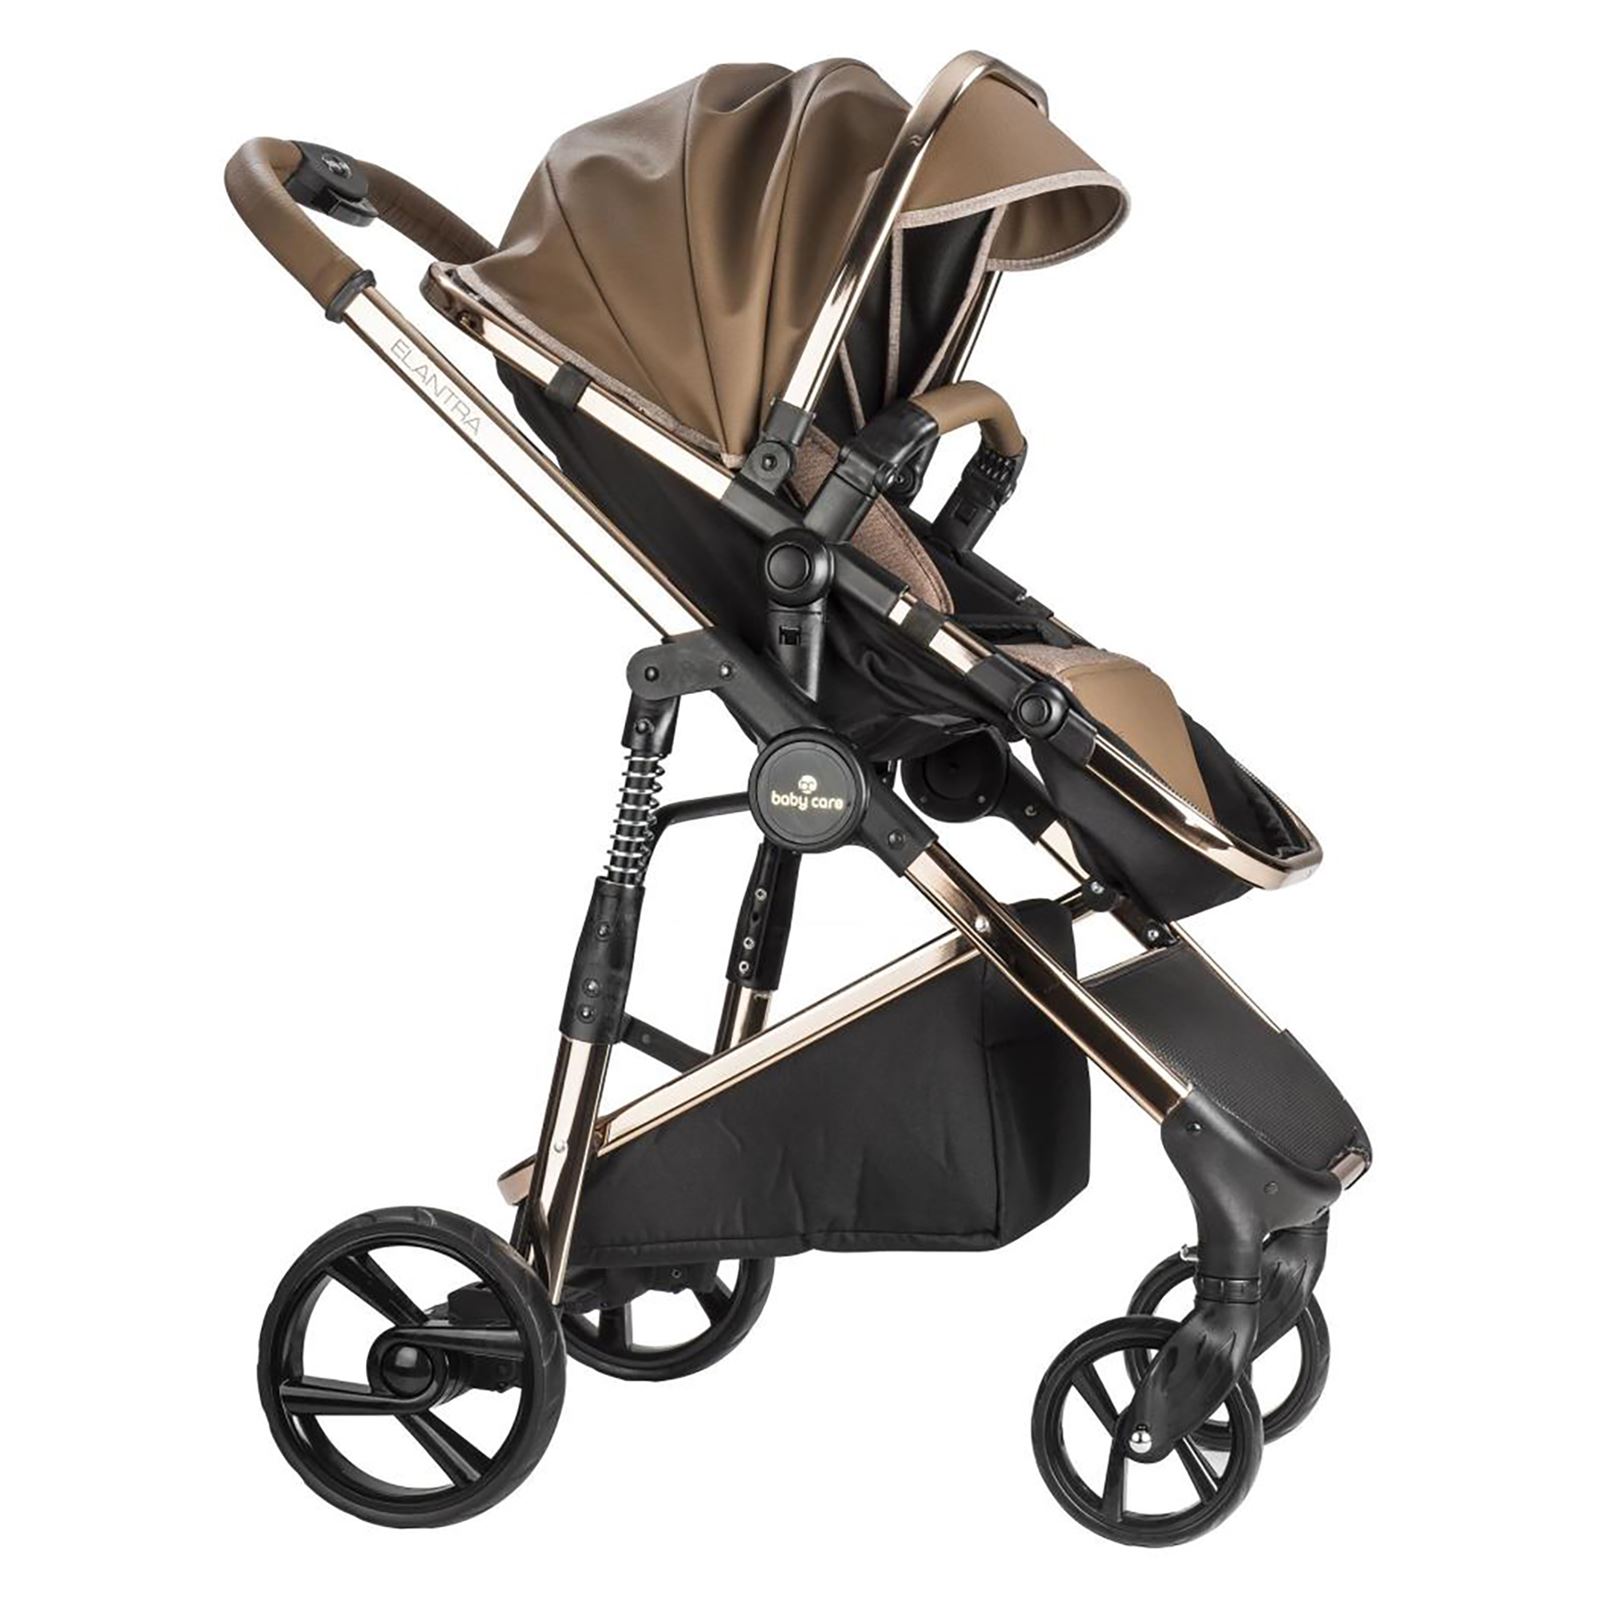 BabyCare Elantra Premium Travel Puset Sistem Bebek Arabası Siyah